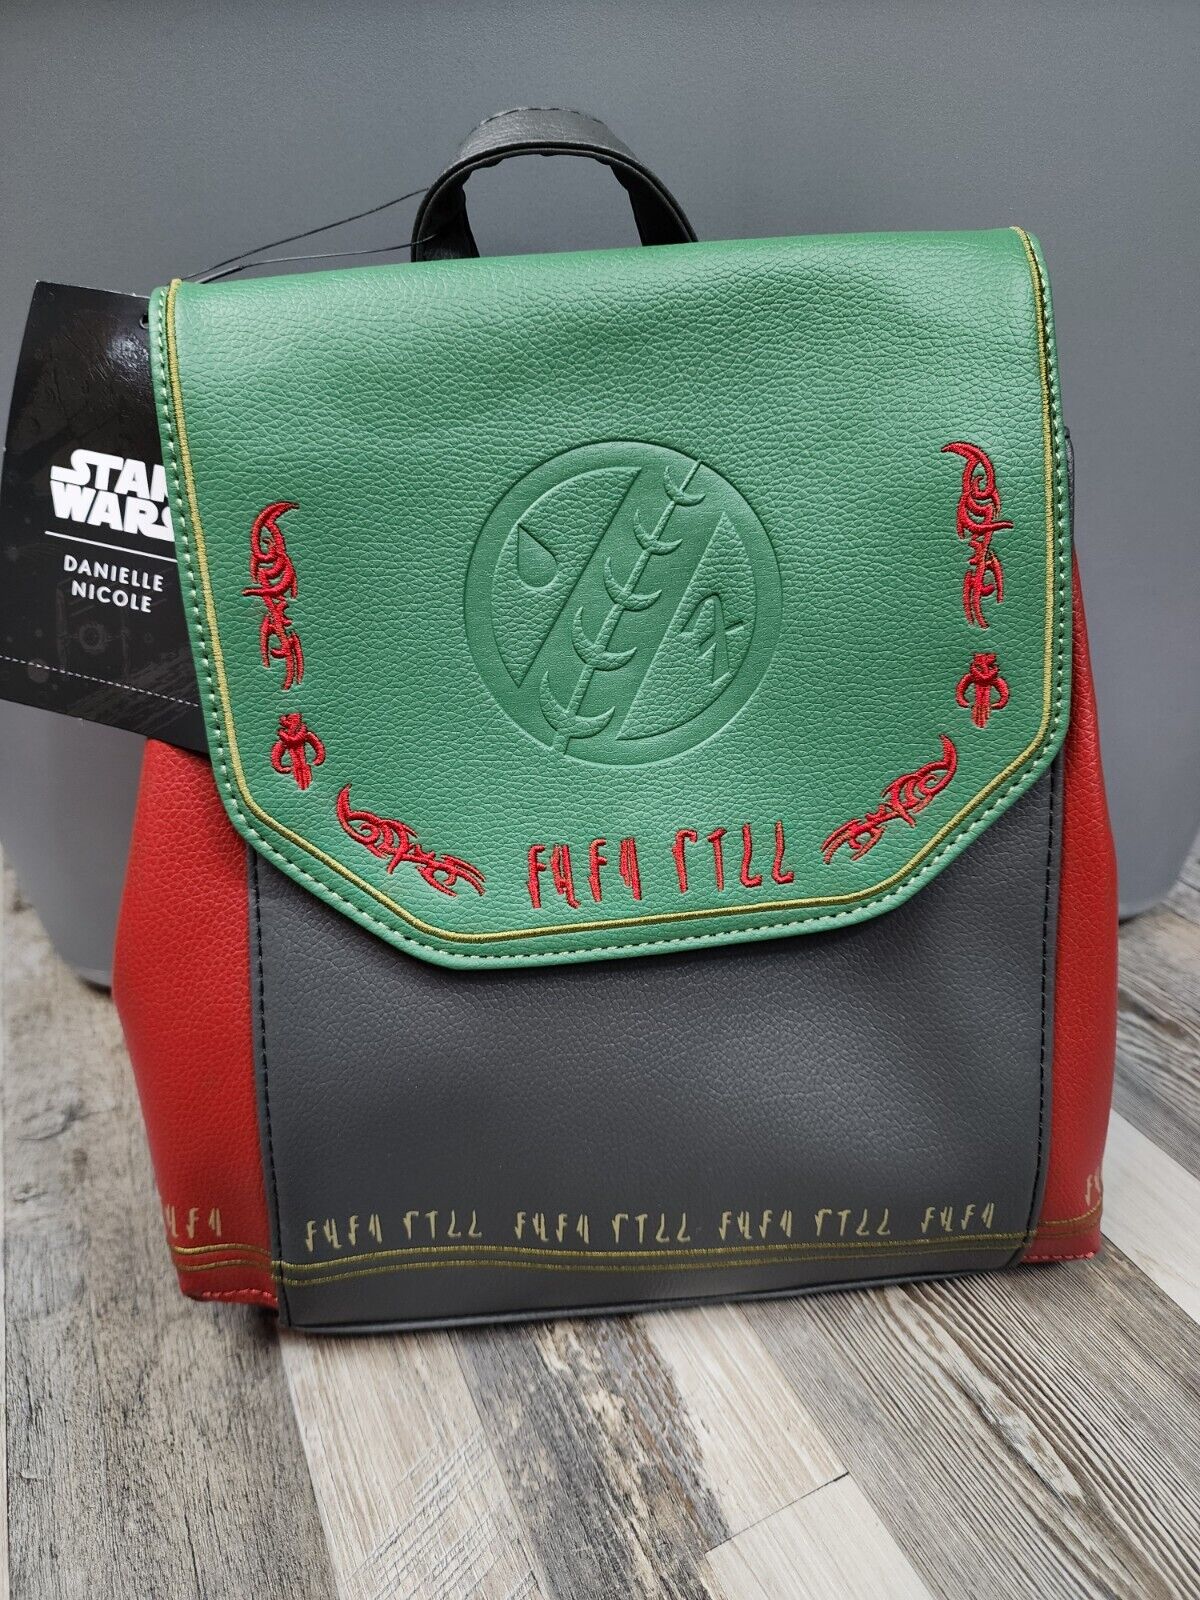 NEW Danielle Nicole Star Wars Boba Fett MINI Backpack Bag Embroidered Limited